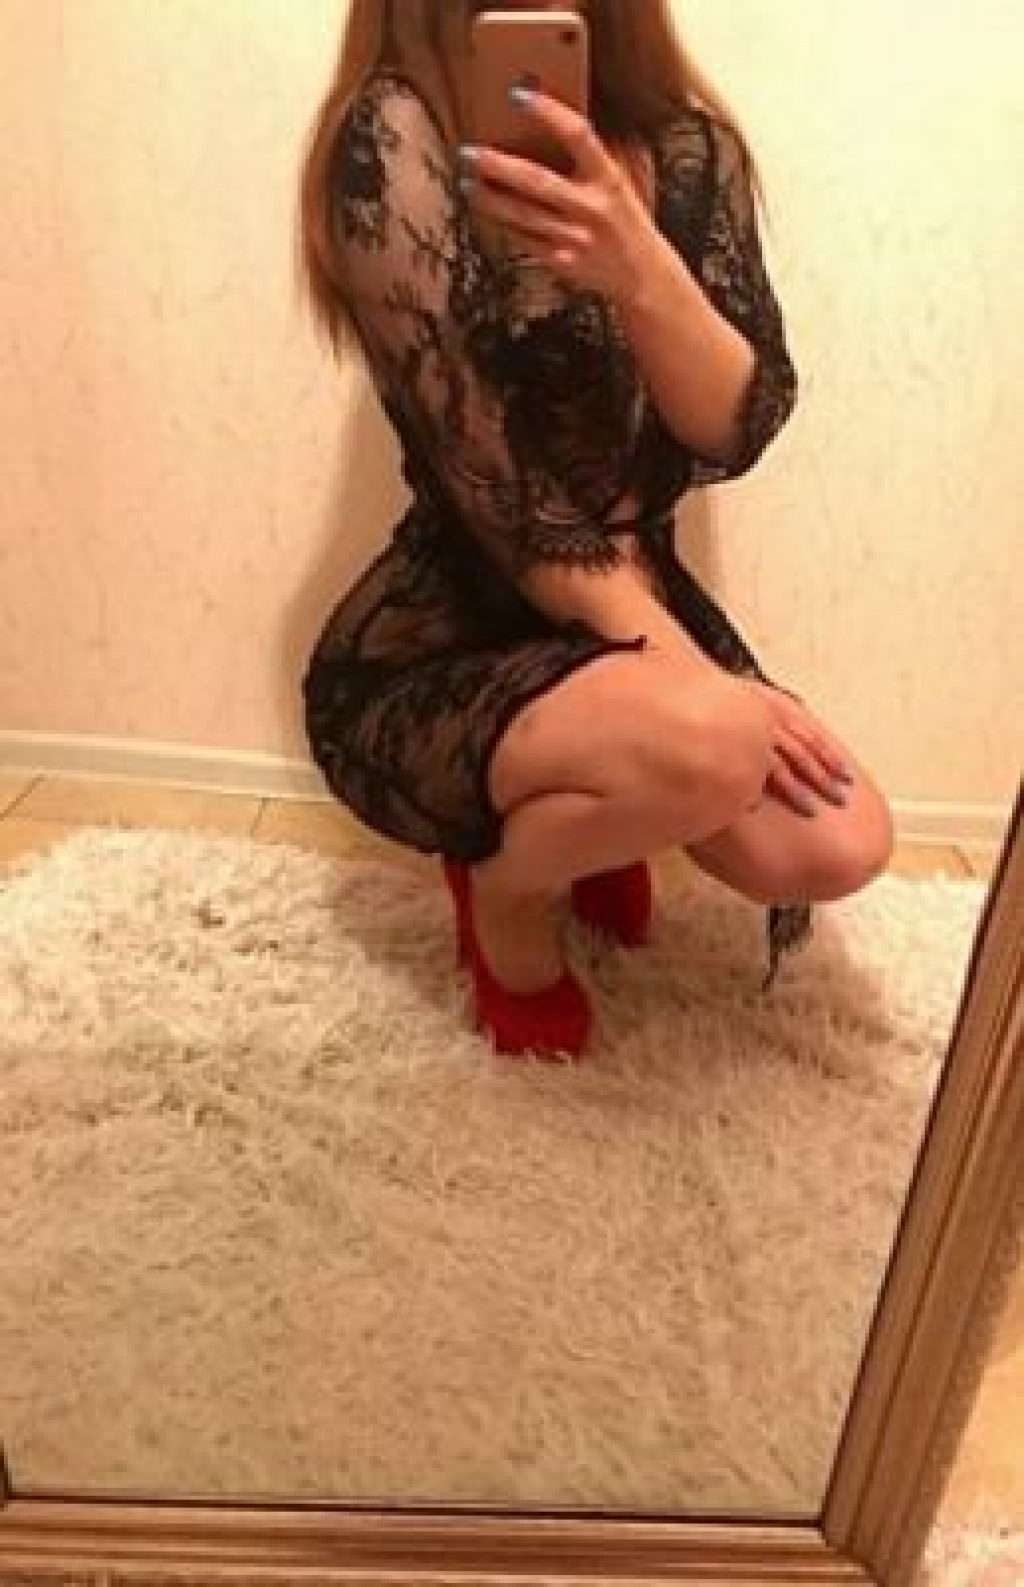 Марина 35: Проститутка-индивидуалка в Хабаровске